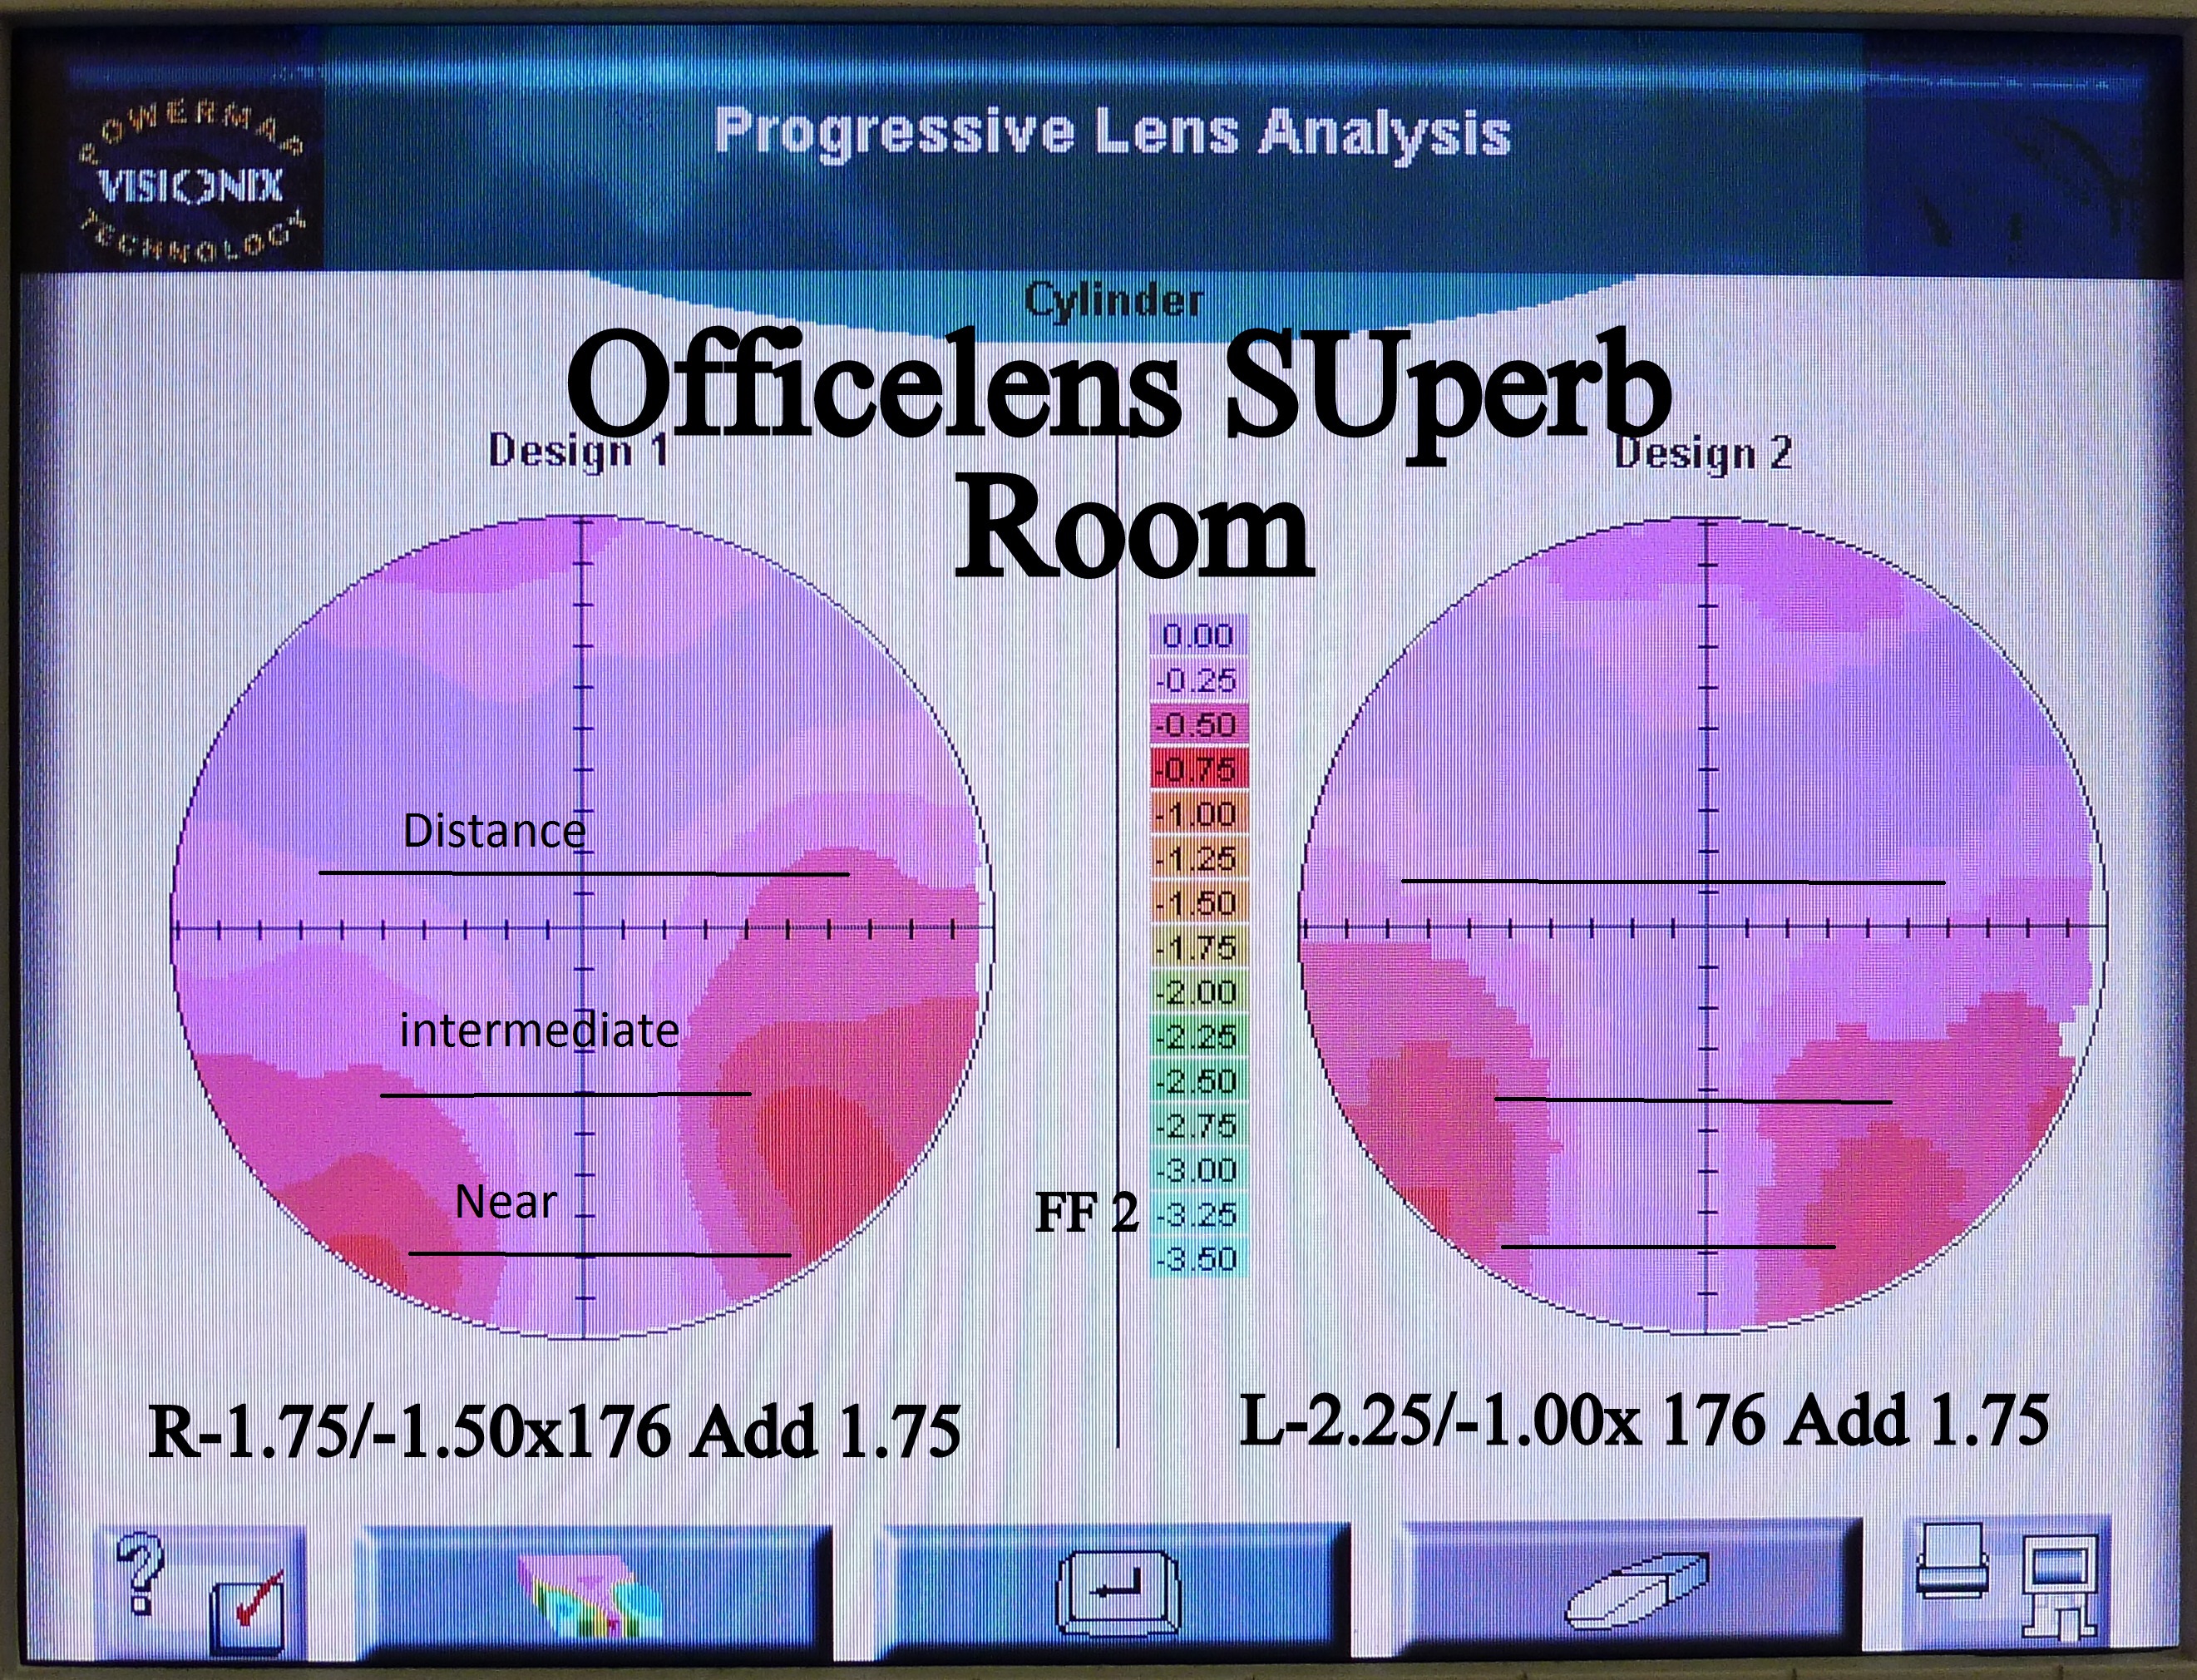 Comparison between Seiko's best progressive lens and Zeiss officelens -  Evershine Optical